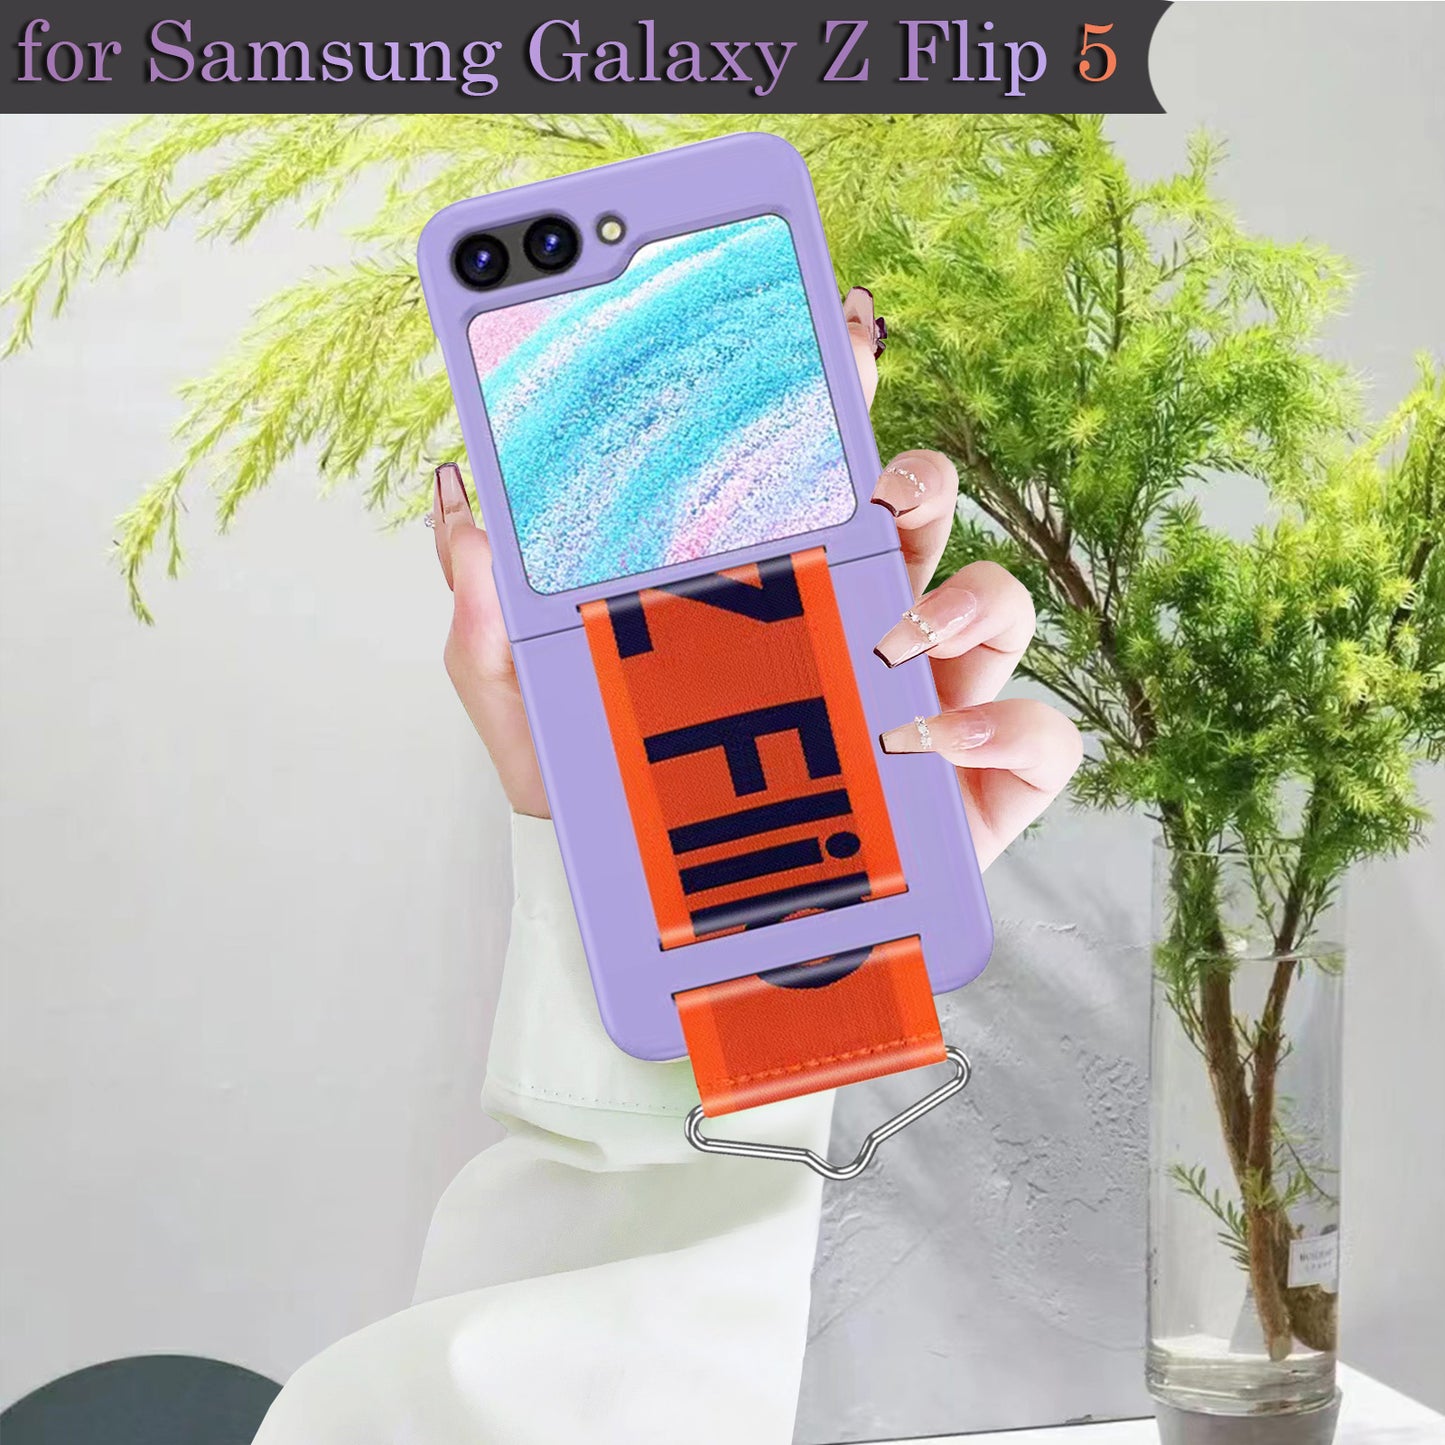 Miitoomo for Samsung Galaxy Z Flip 5 Case with Wrist Band "Z Flip" Letters Pattern